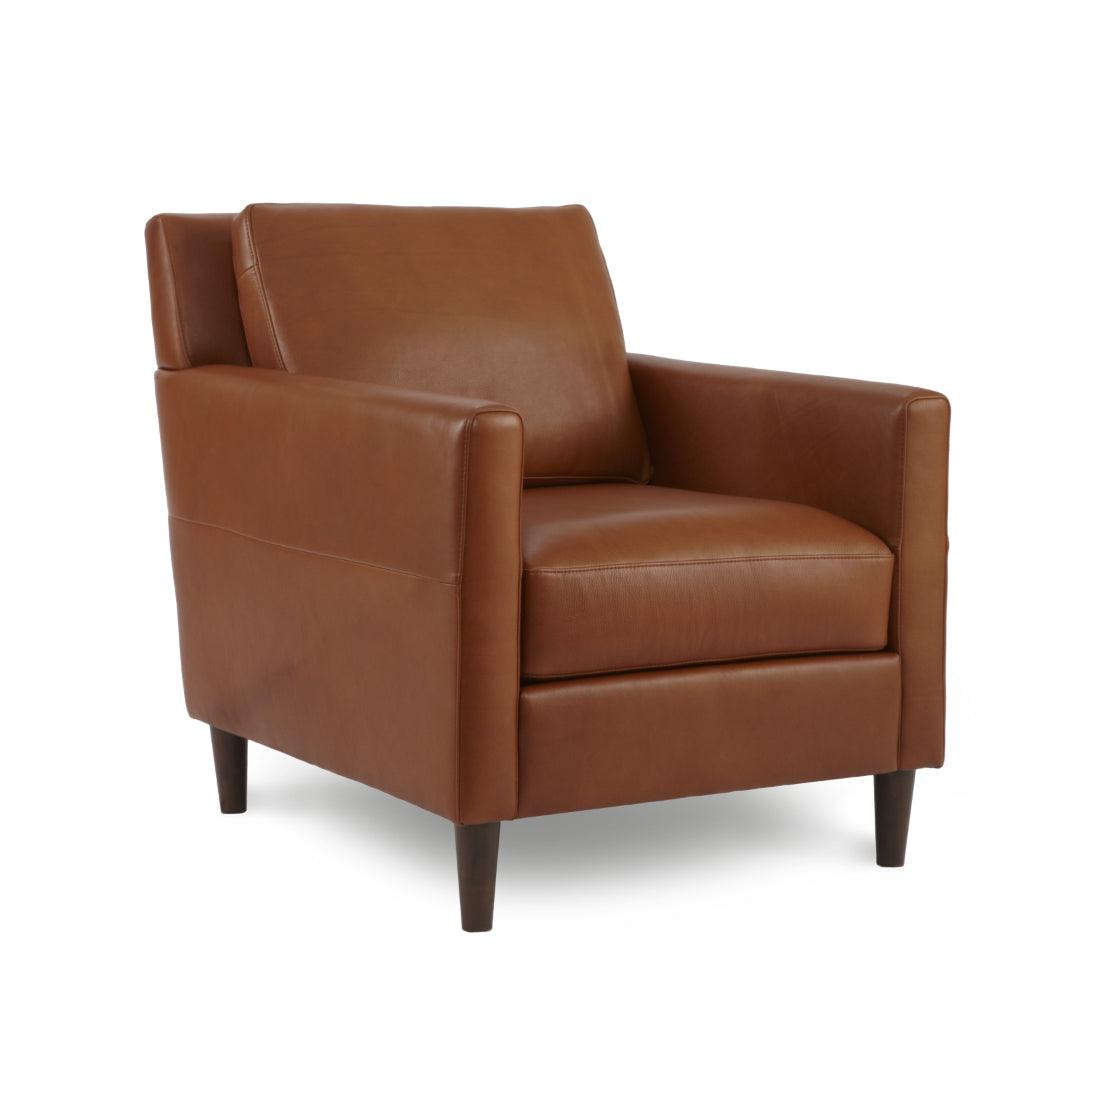 Aero Leather Club Chair Custom Made to Order - Uptown Sebastian